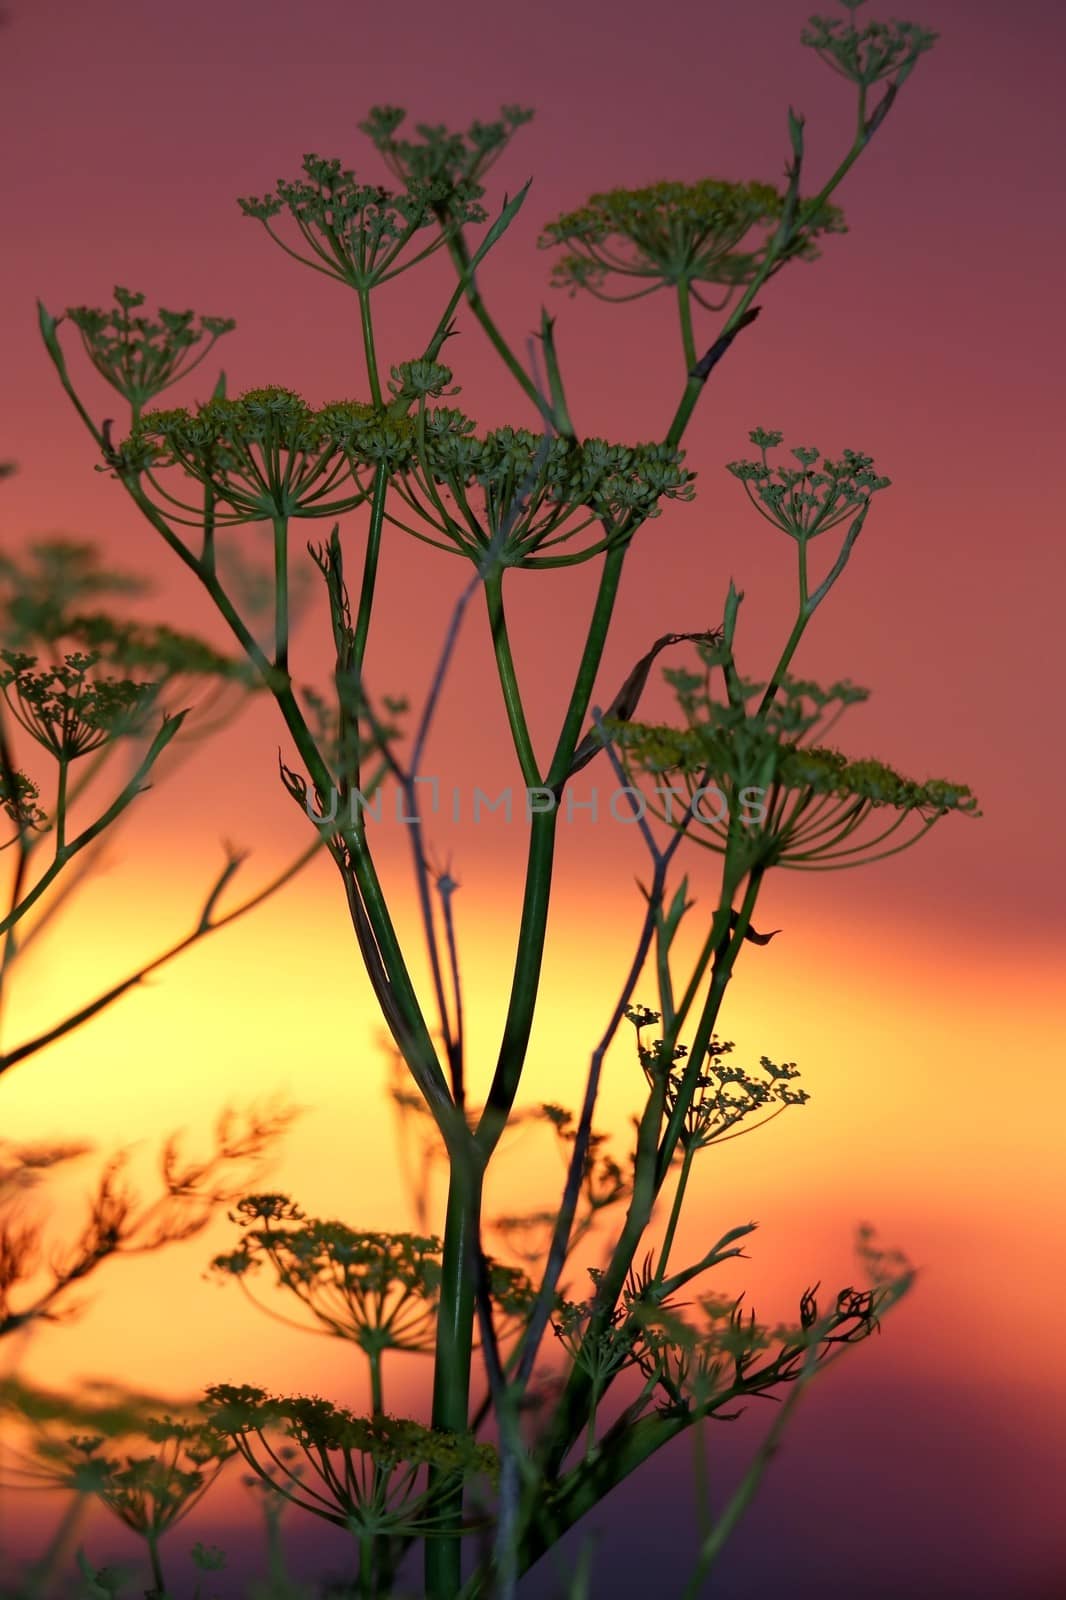 Sunset Plant by fouroaks